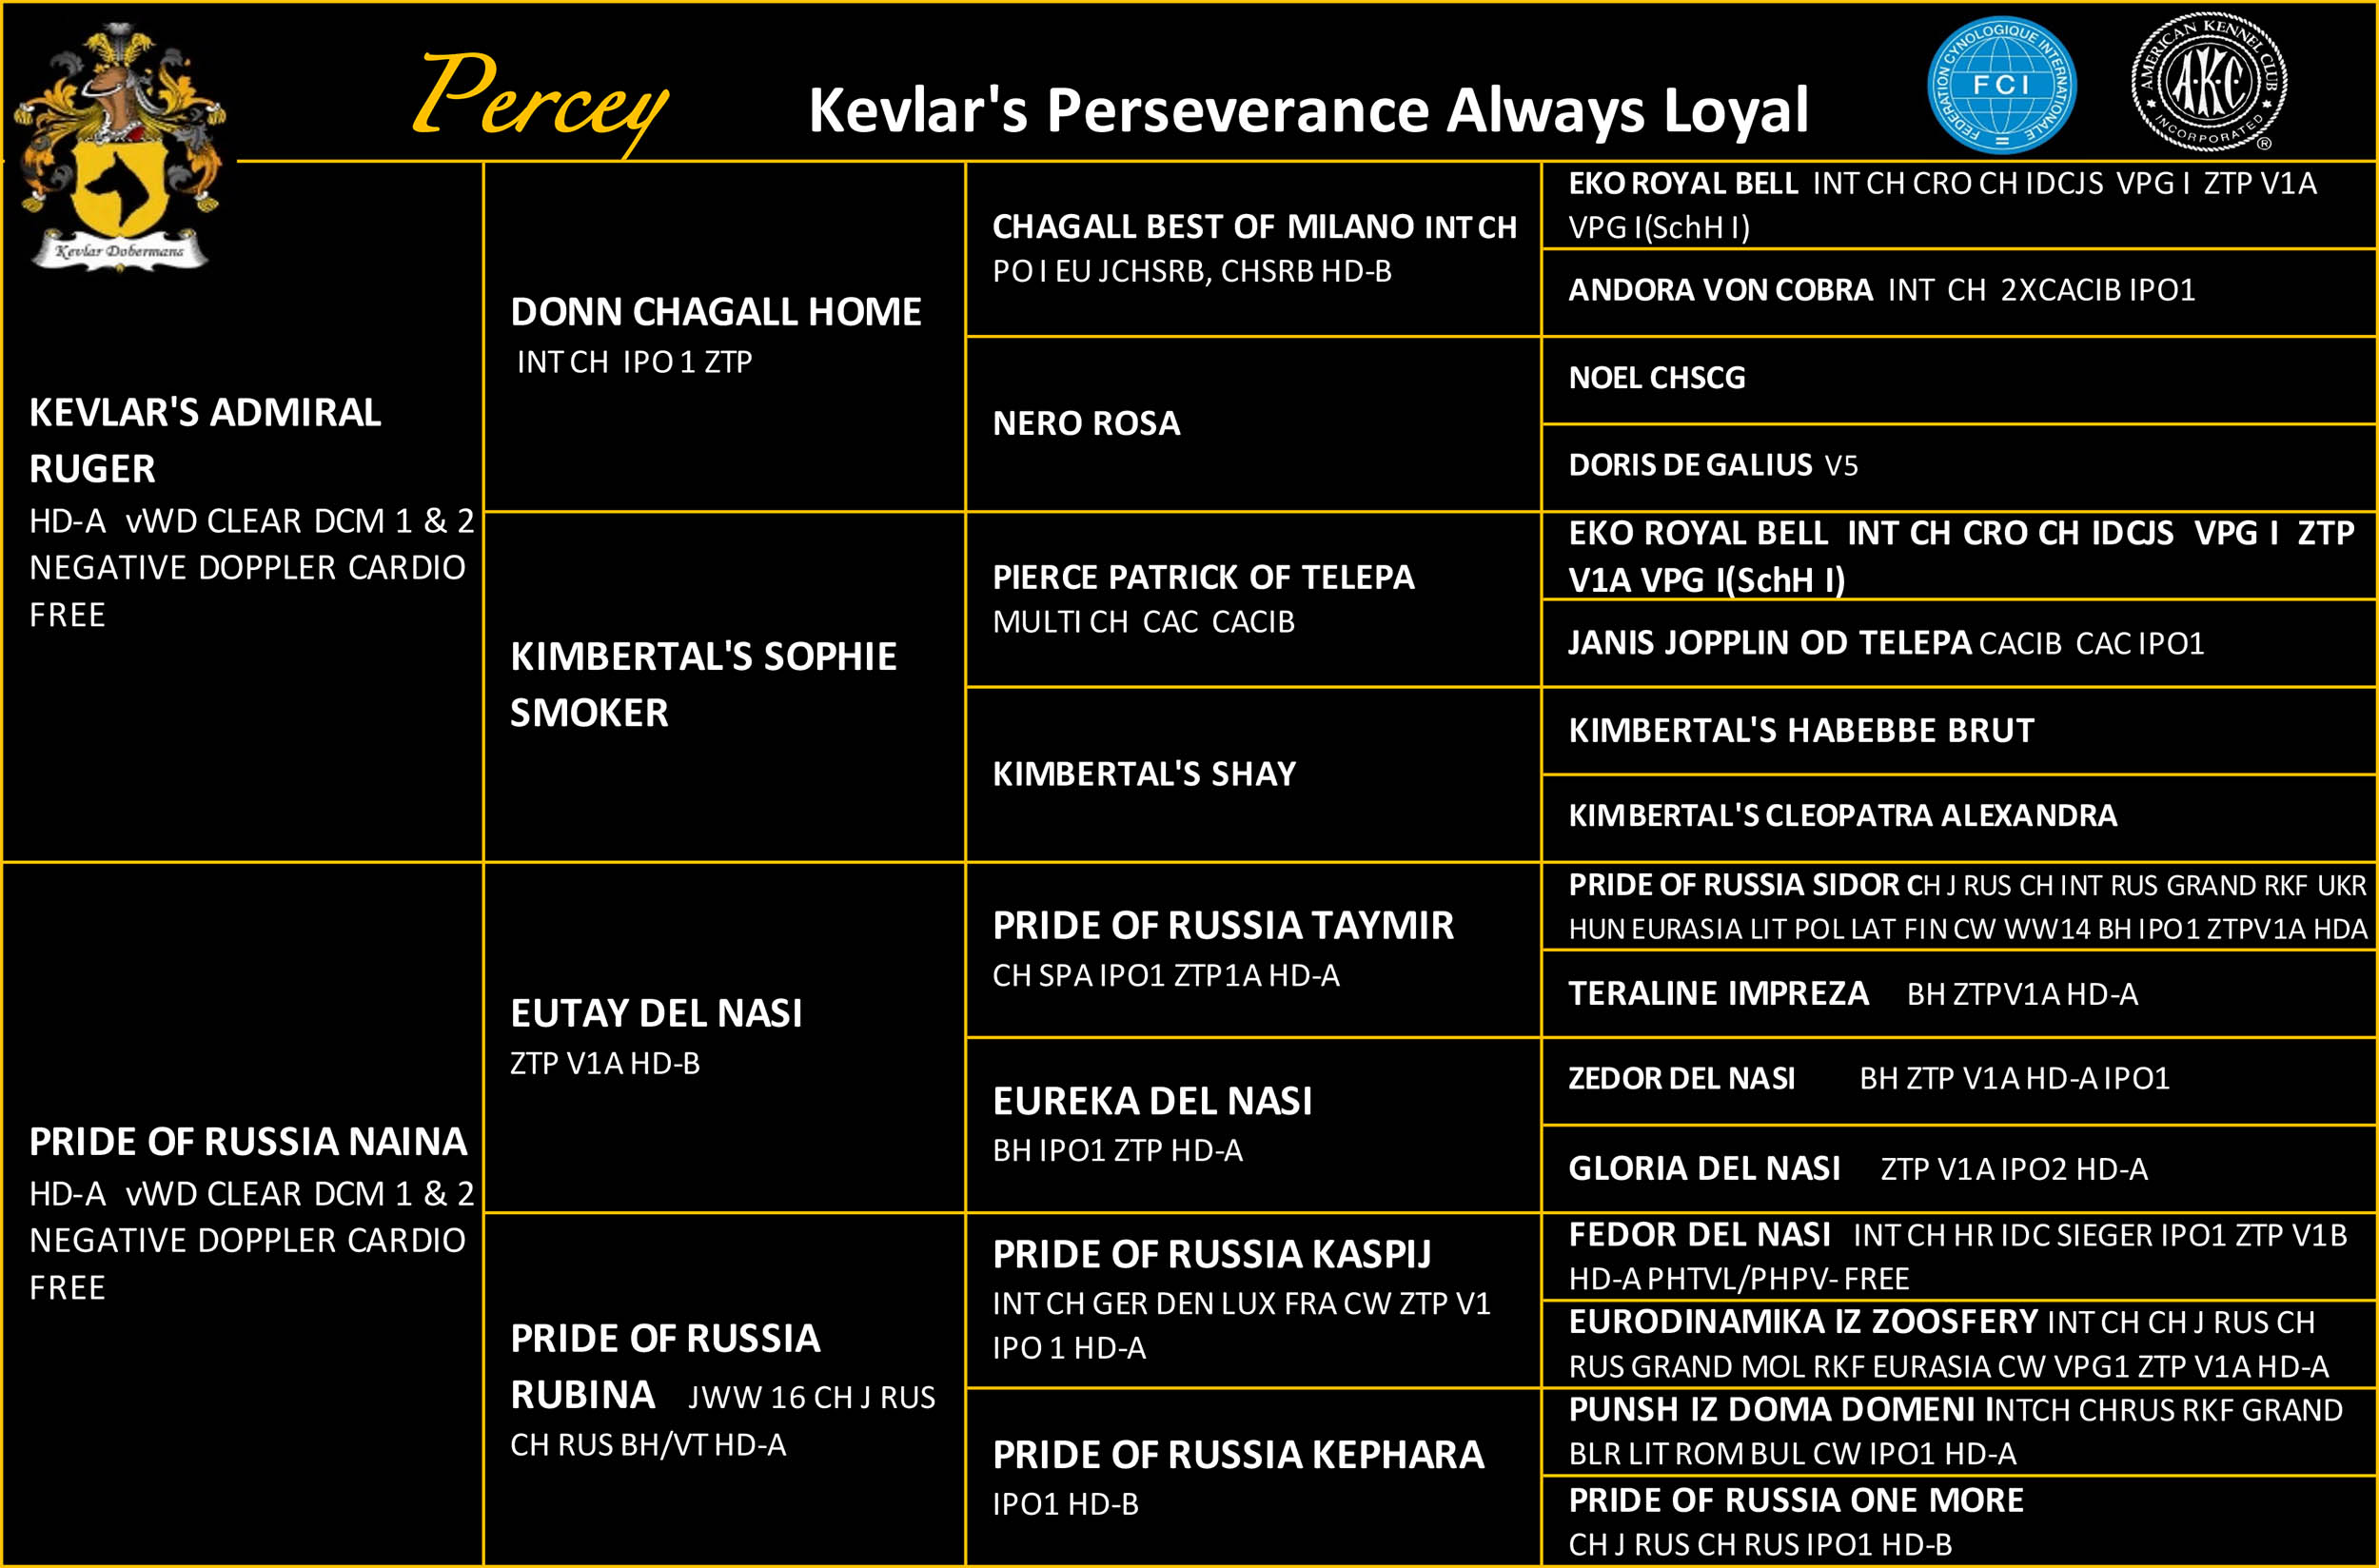 Kevlar's Perseverance Always Loyal